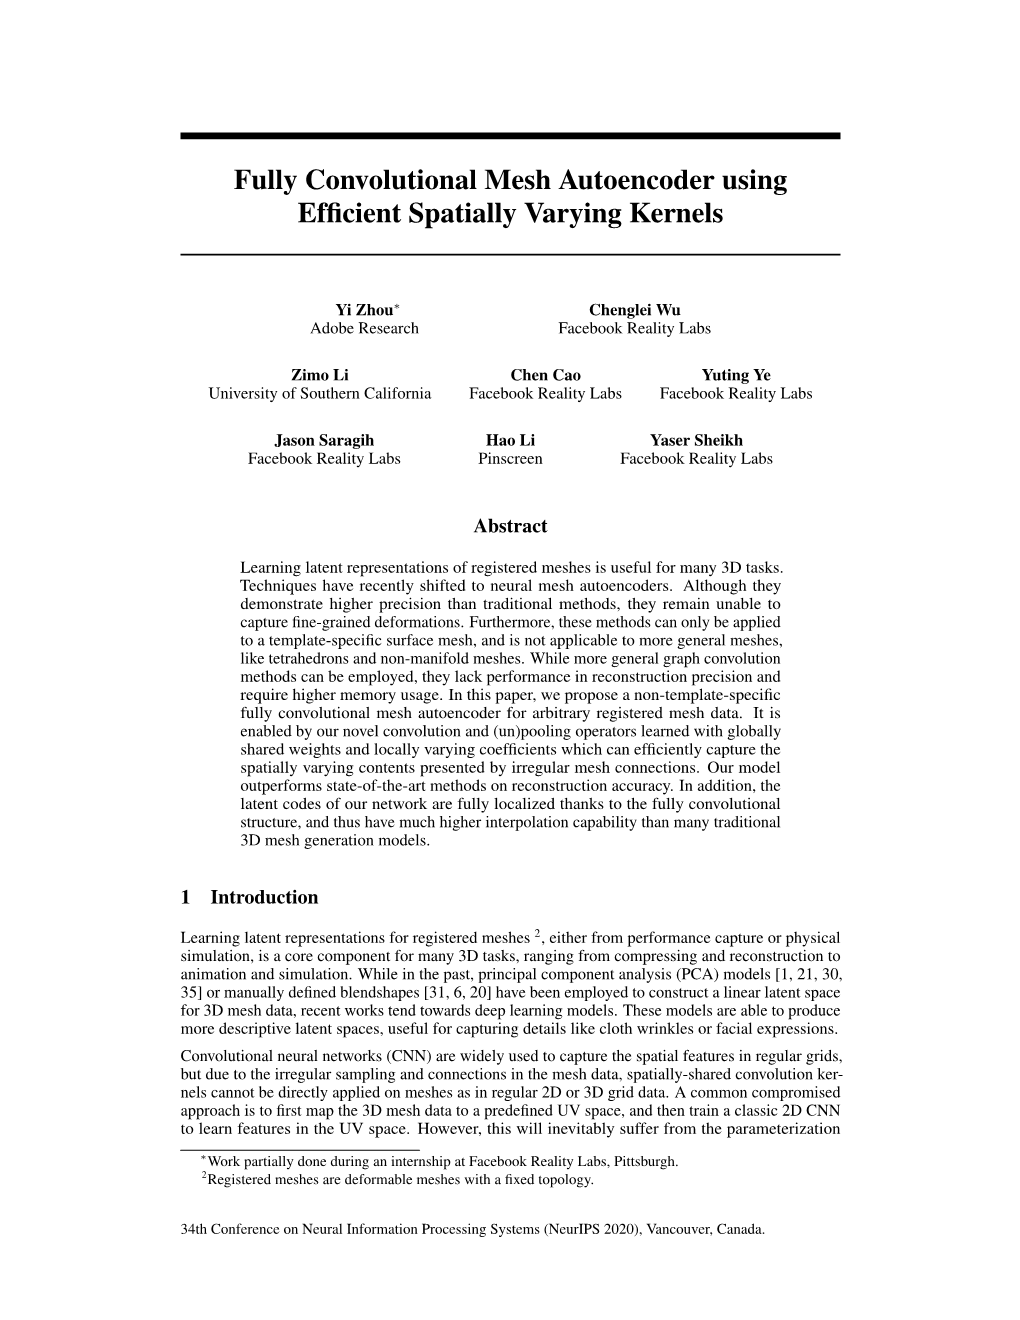 Fully Convolutional Mesh Autoencoder Using Efficient Spatially Varying Kernels